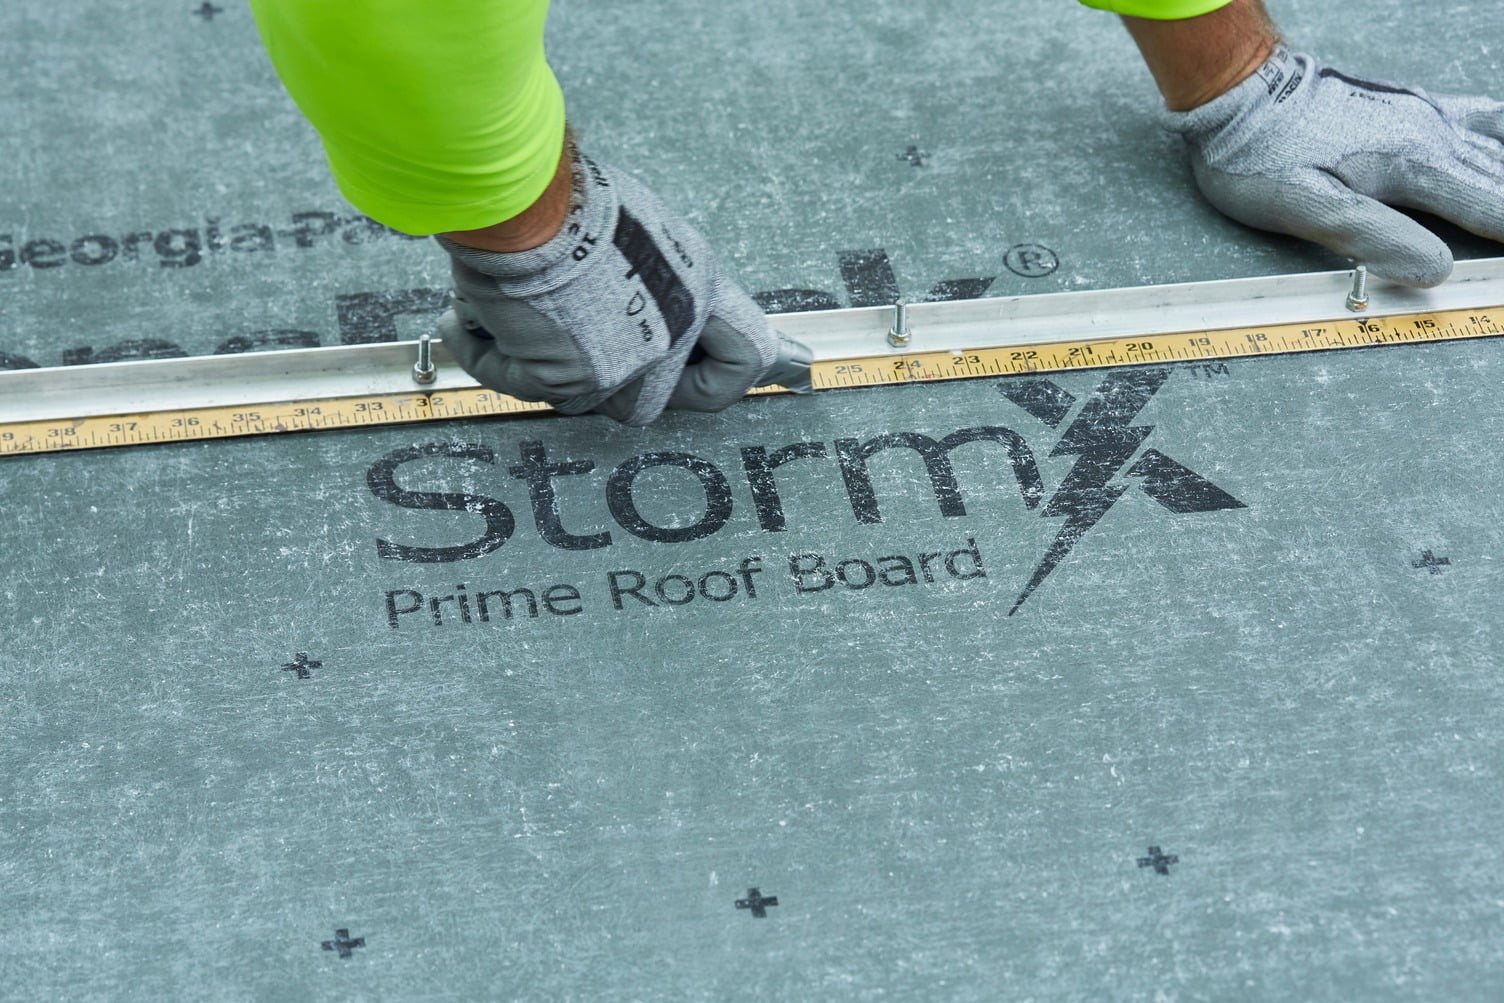 GP Dens Deck Storm X Prime Roof Board Installation